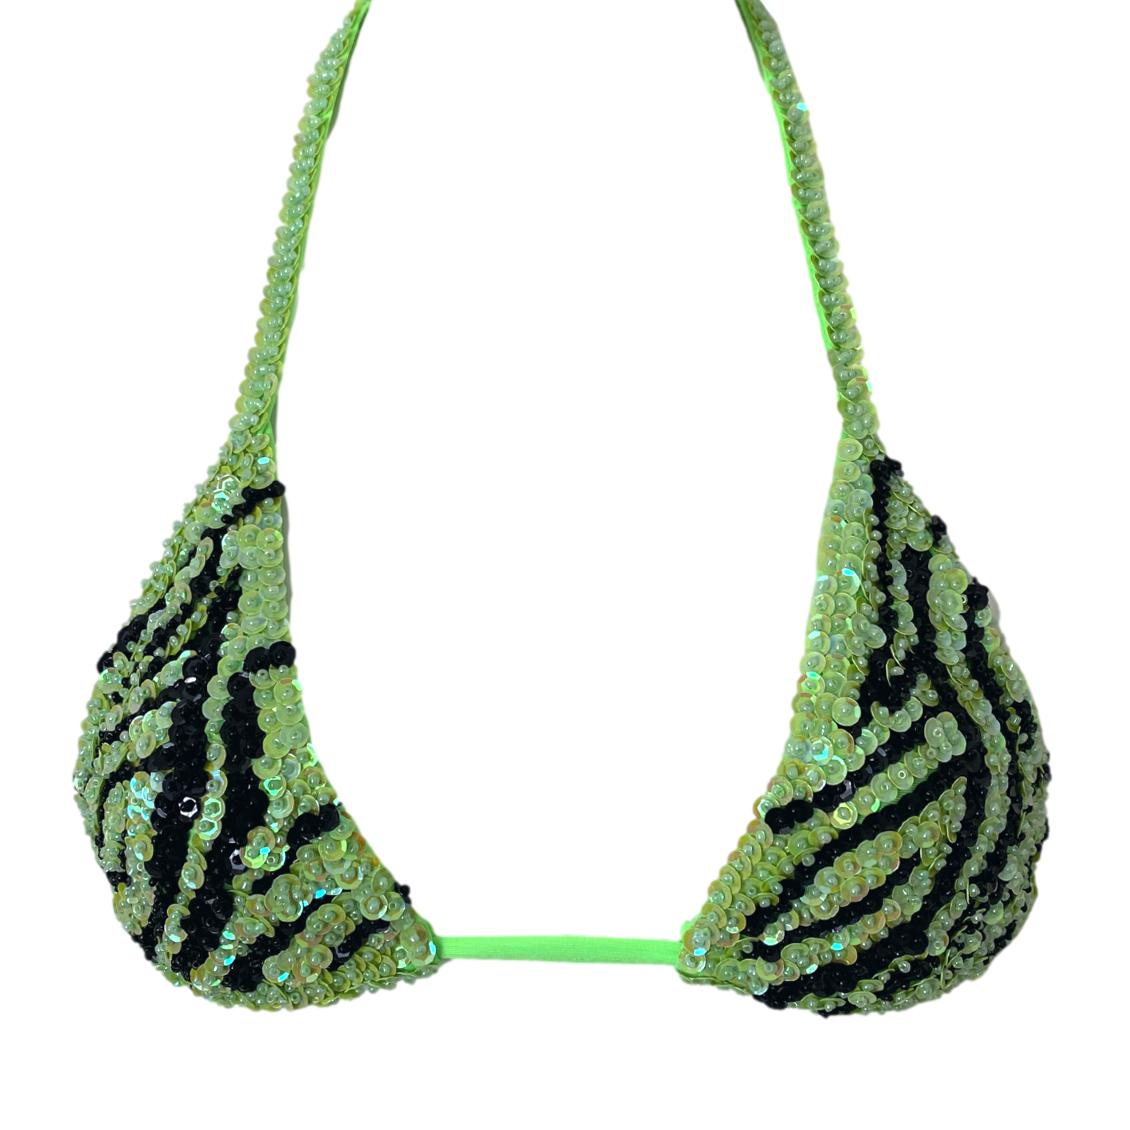 neon green and black zebra print triangle bikini crop top for festival outfits 